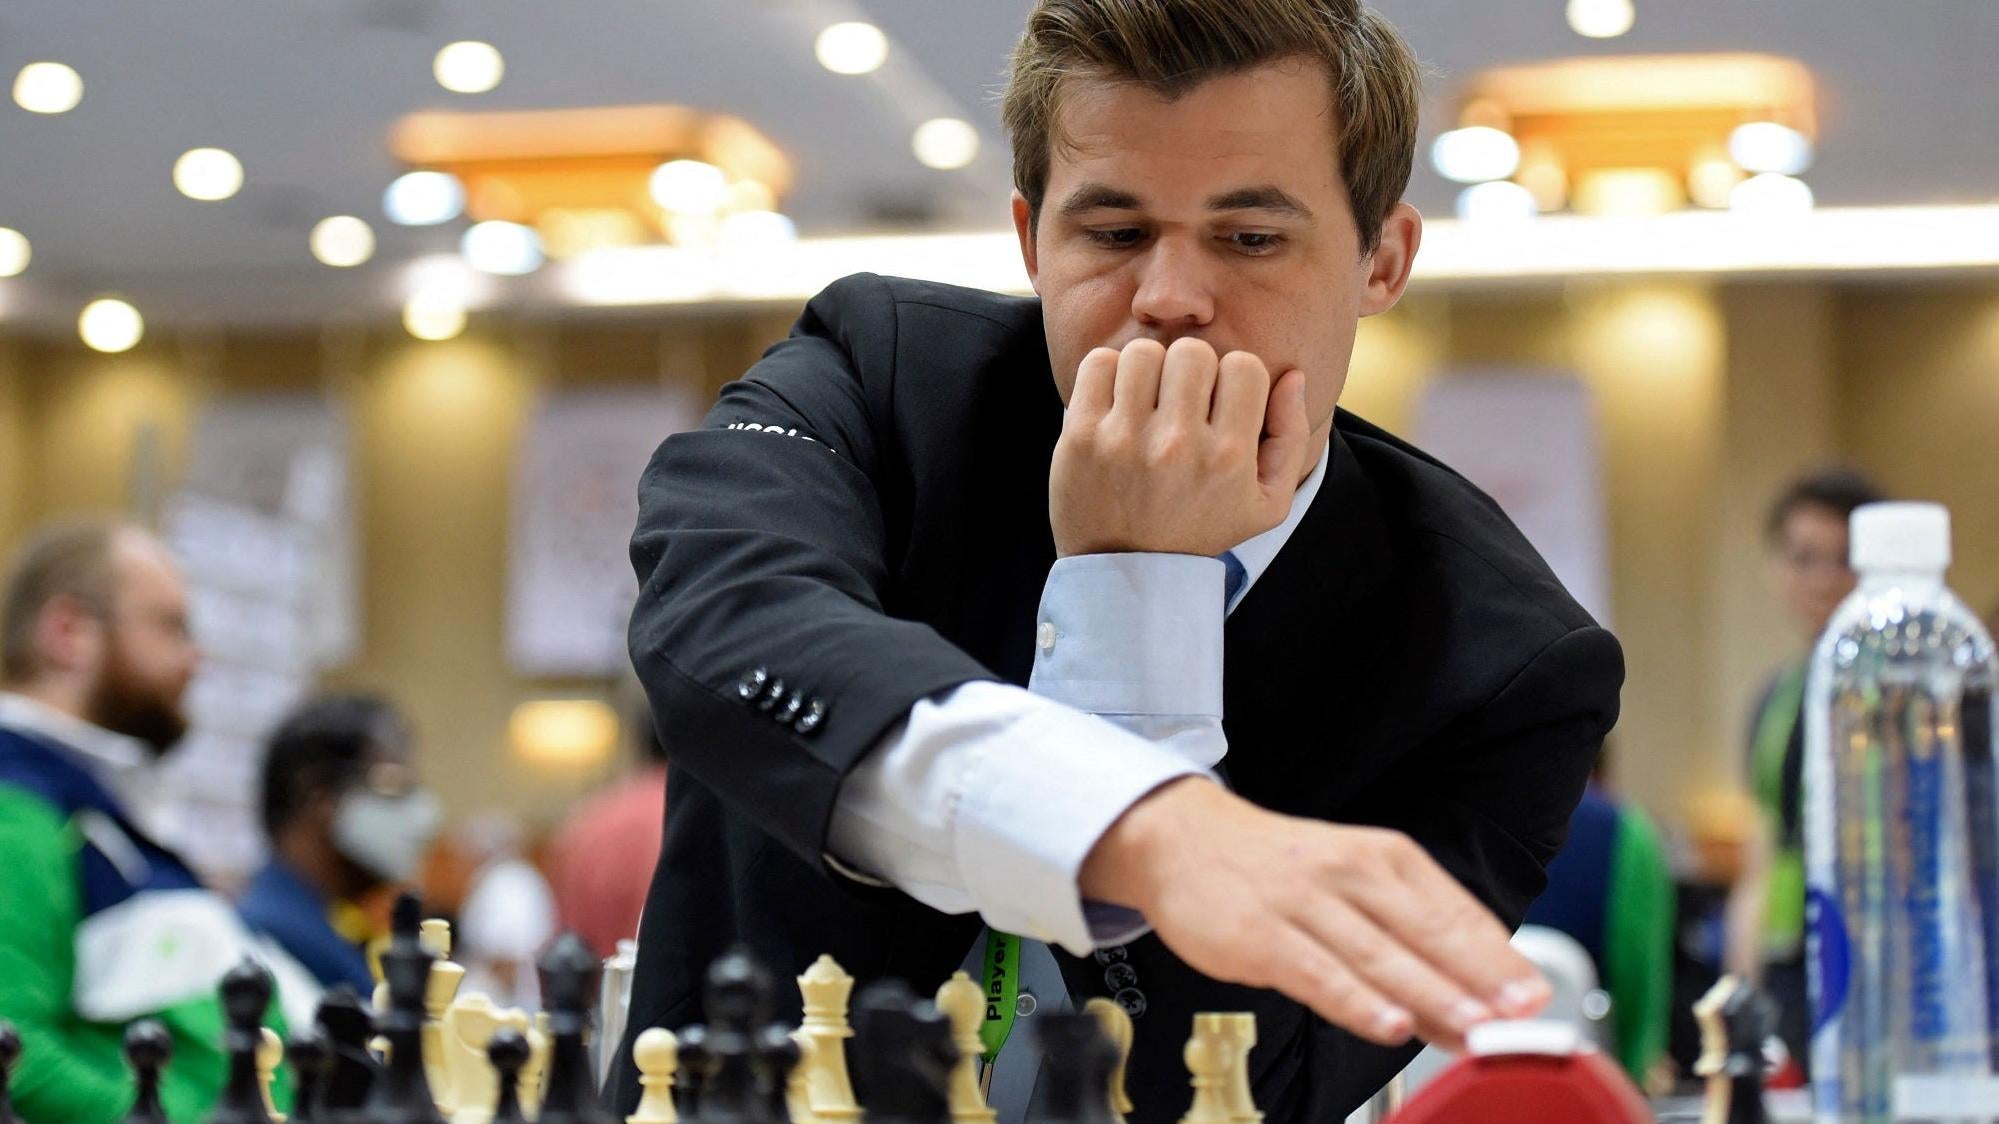 Us Chess Grandmaster Hans Niemann Plays Foto stock editorial - Imagem stock